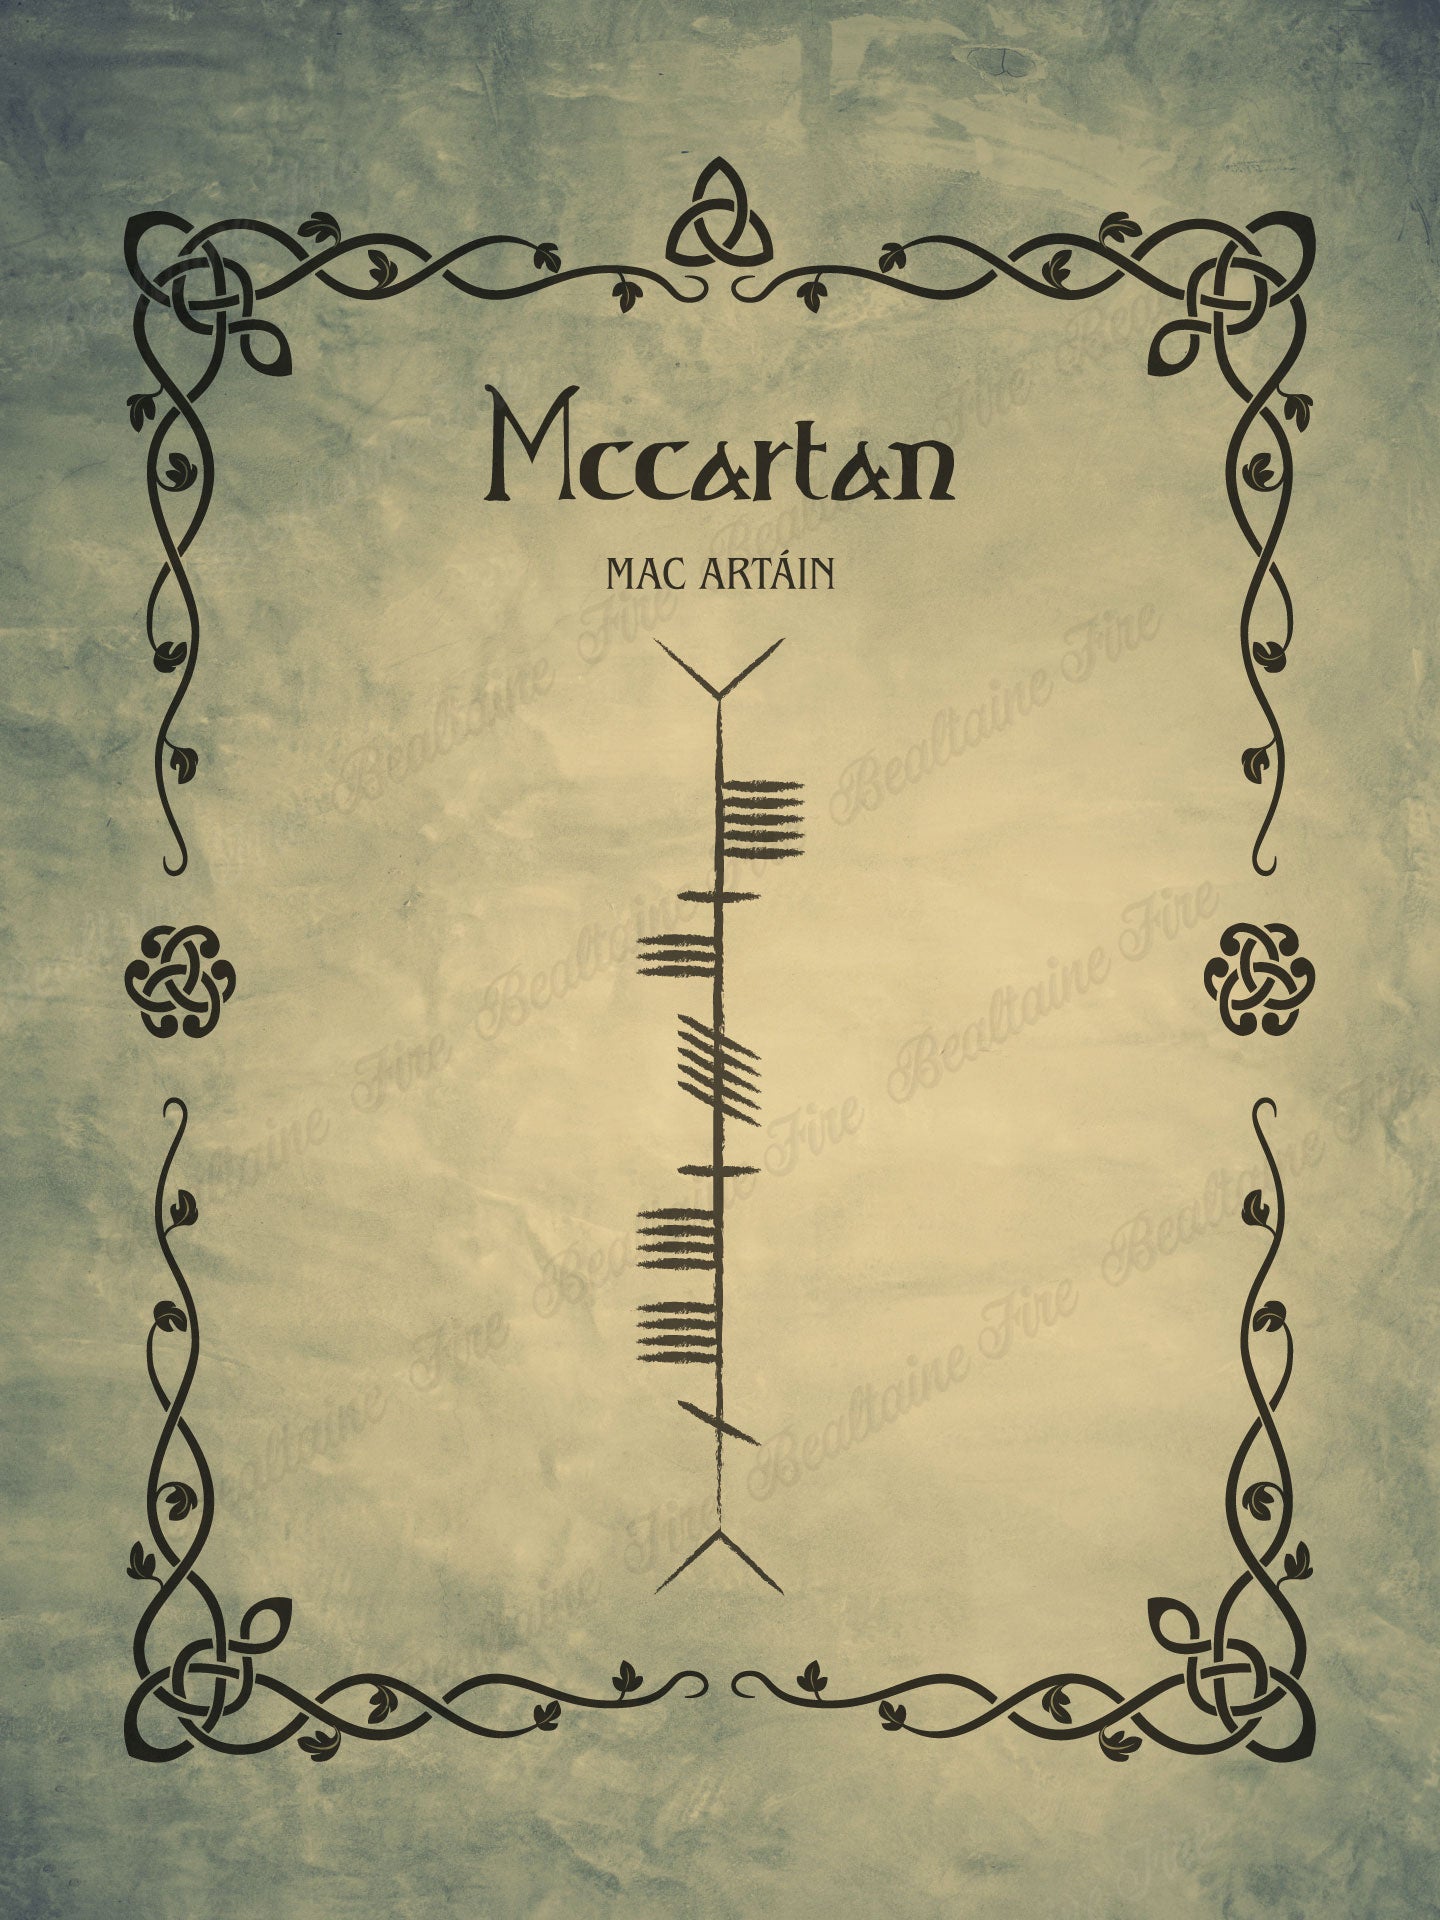 Mccartan in Ogham premium luster unframed print